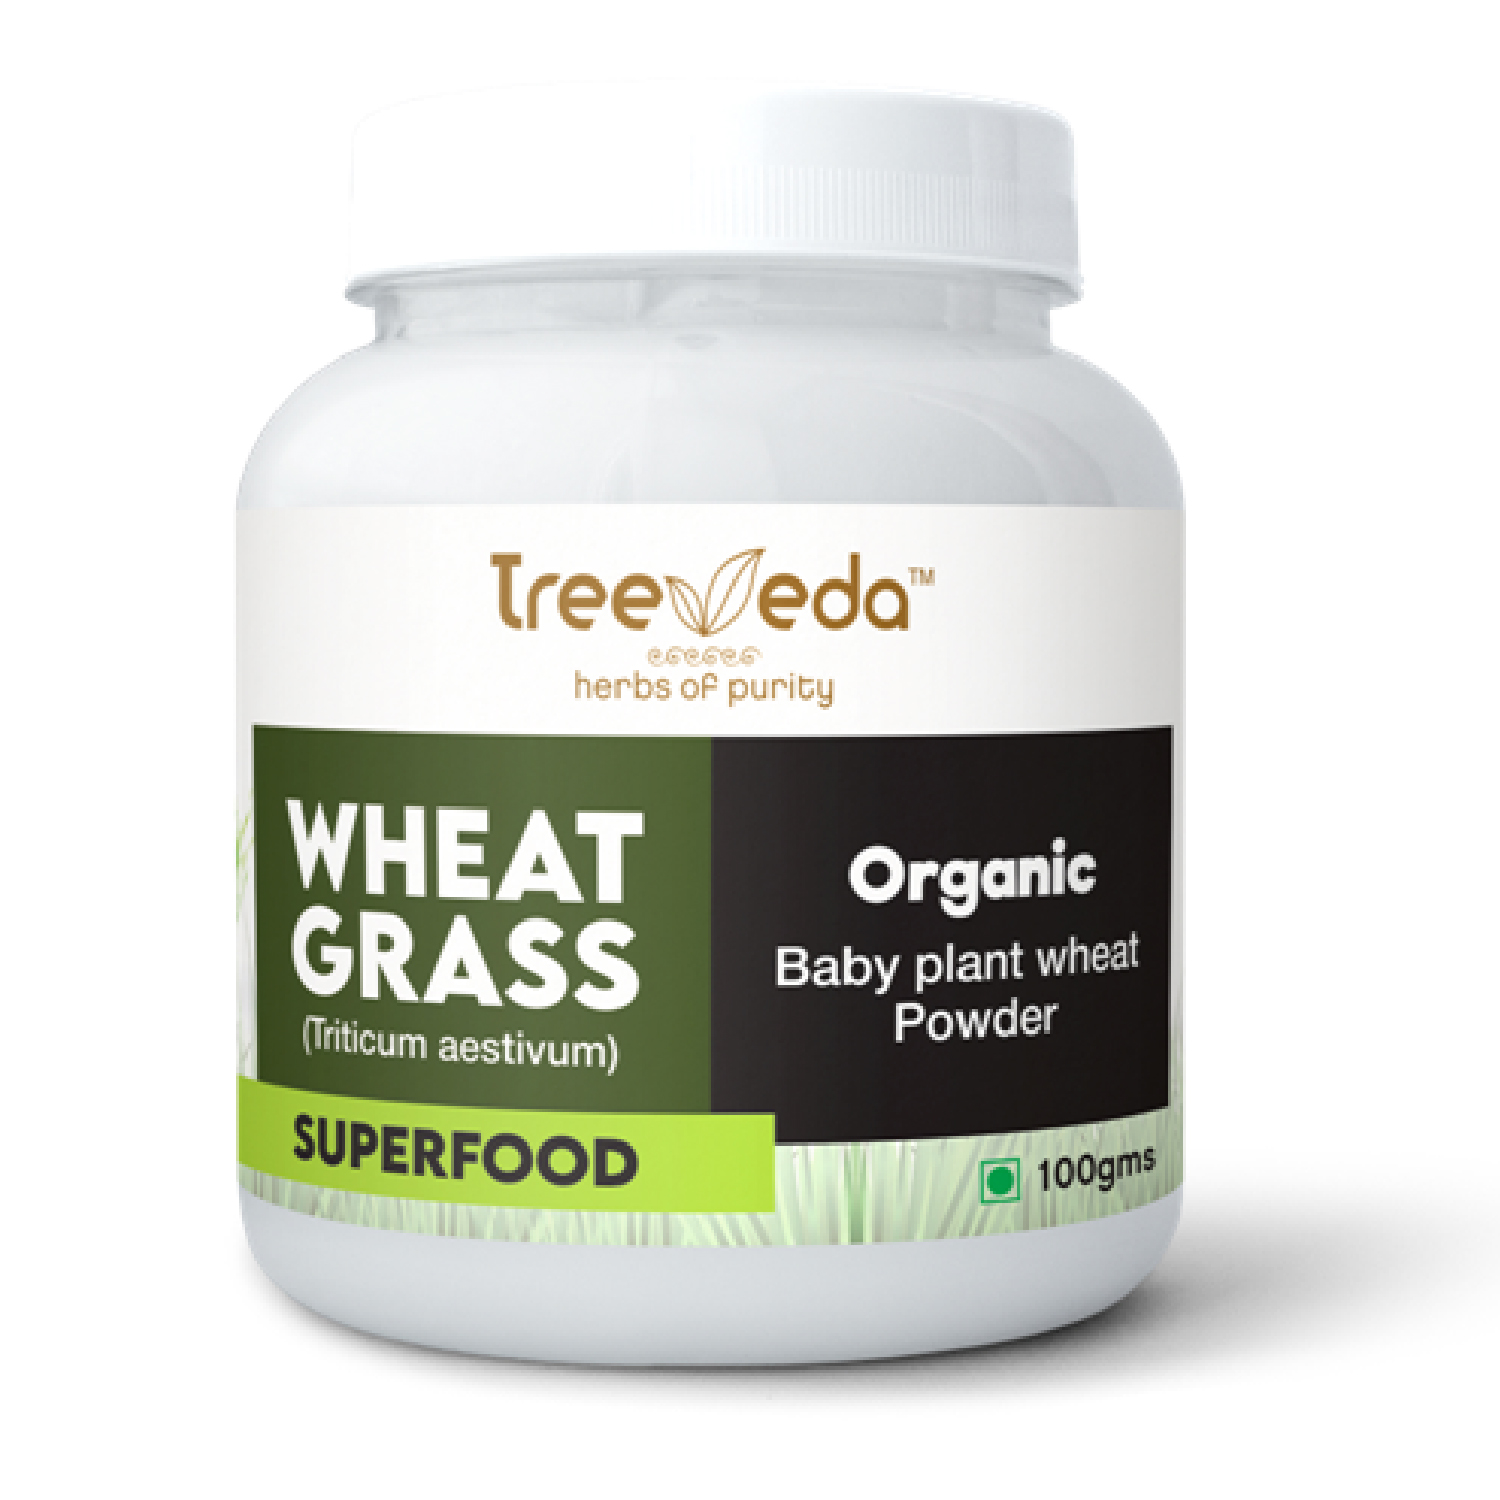 Treeveda Wheat Grass (super food) Baby plant wheat Powder